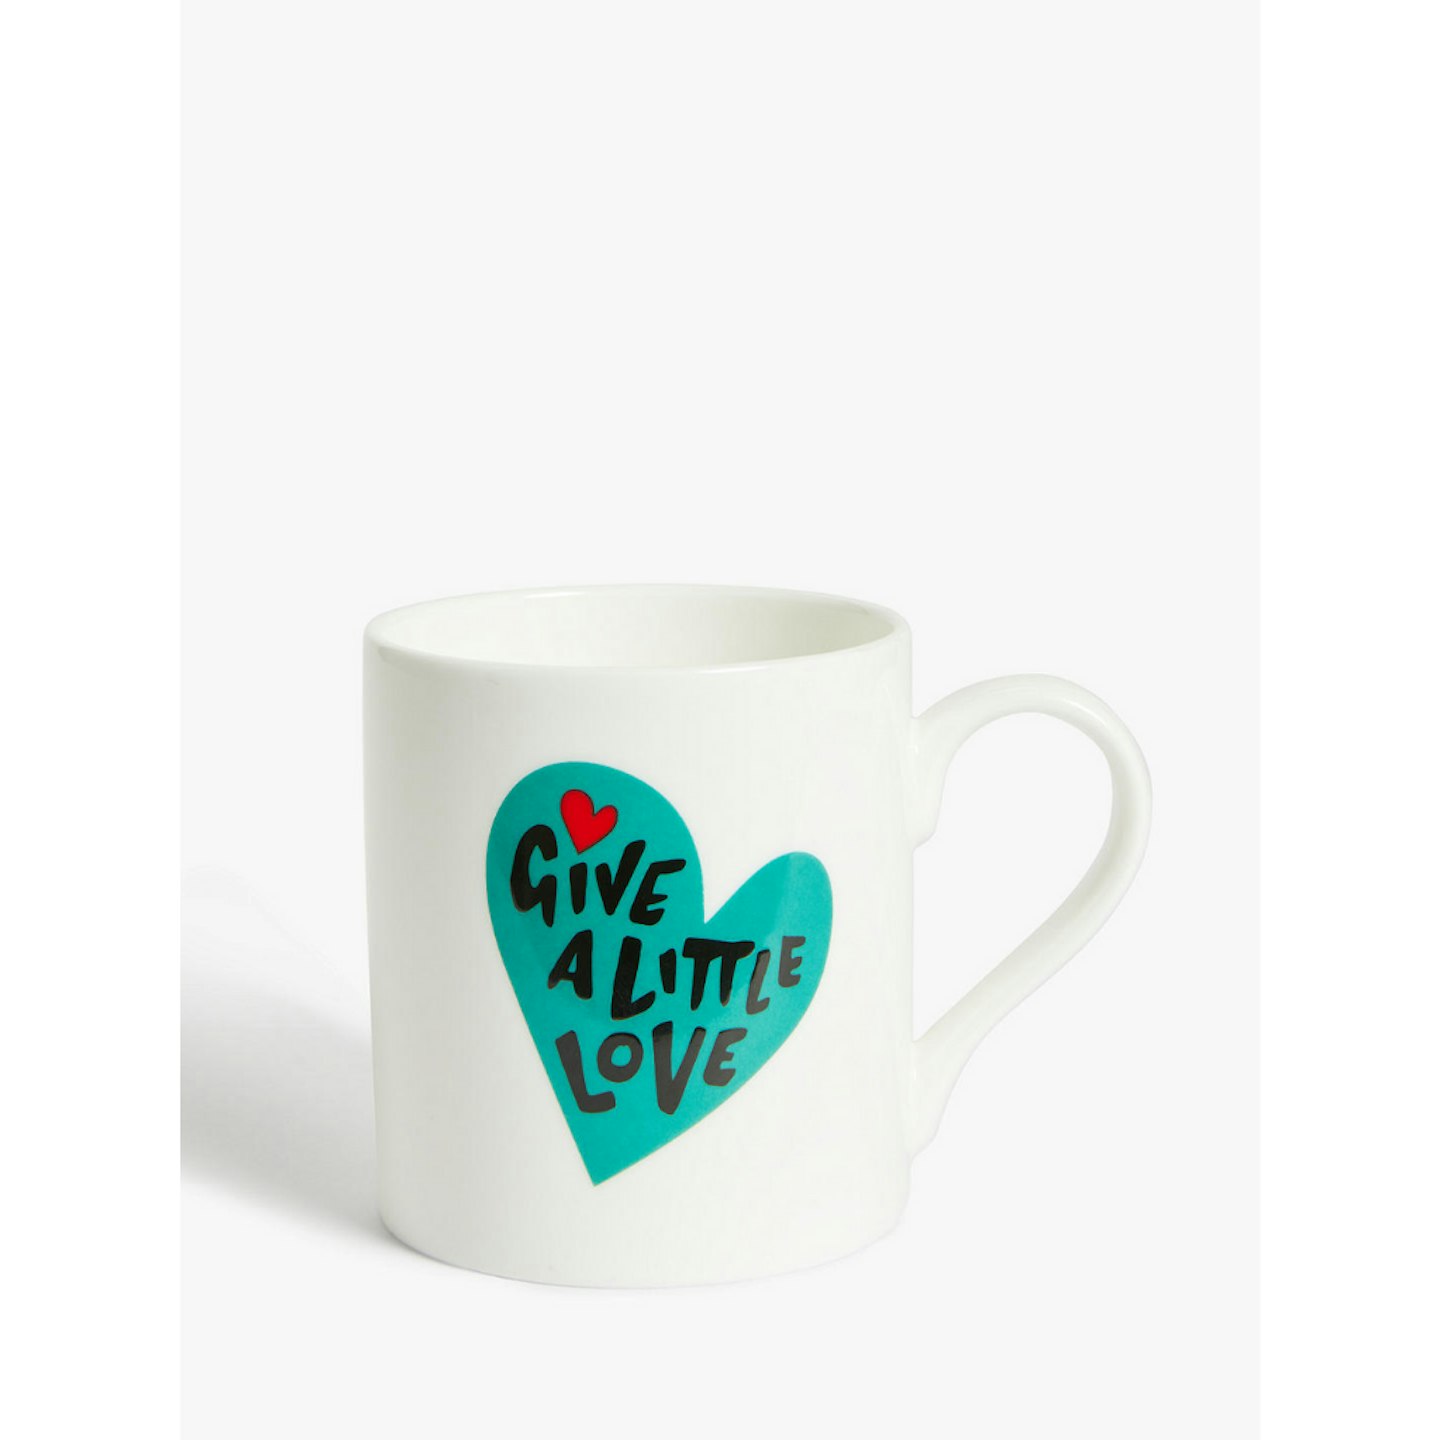 Give a Little Love Mug, 300ml, White/Teal